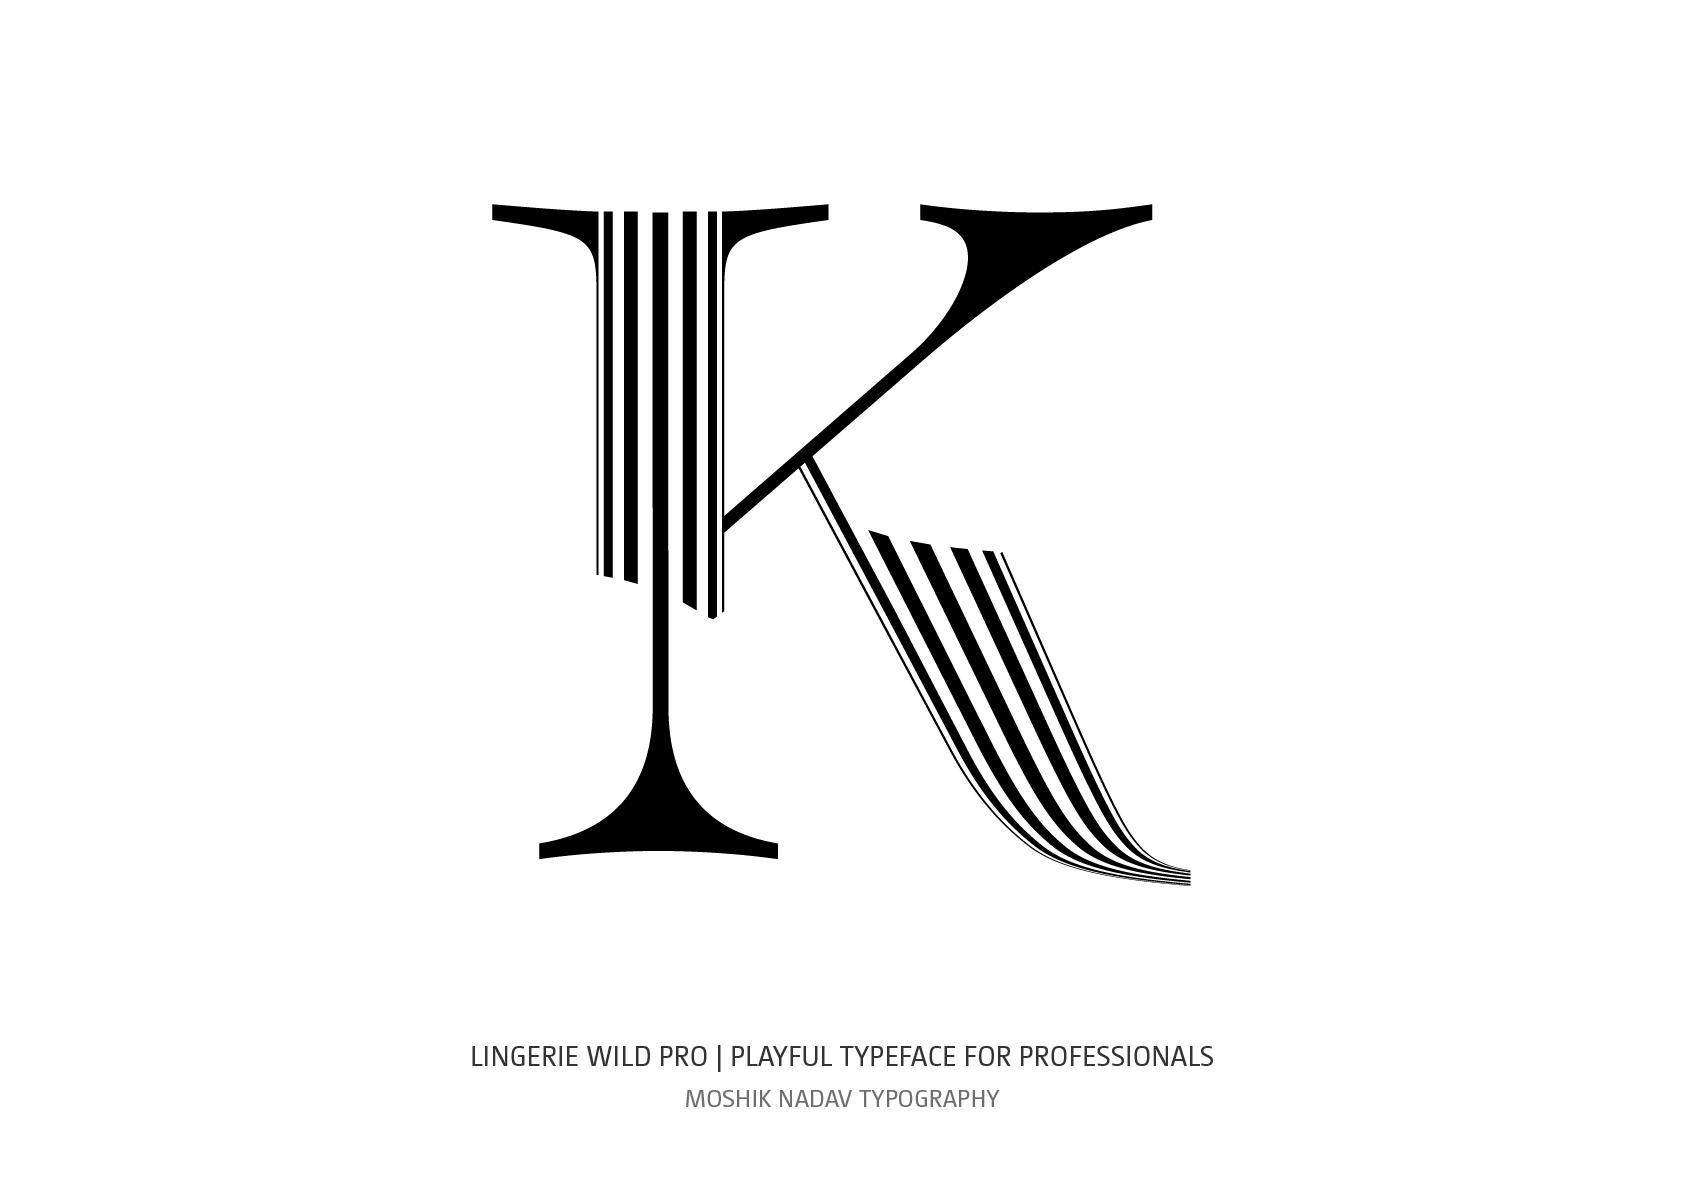 Lingerie Wild Pro Typeface uppercase K designed by Moshik Nadav Fashion Typography and fonts